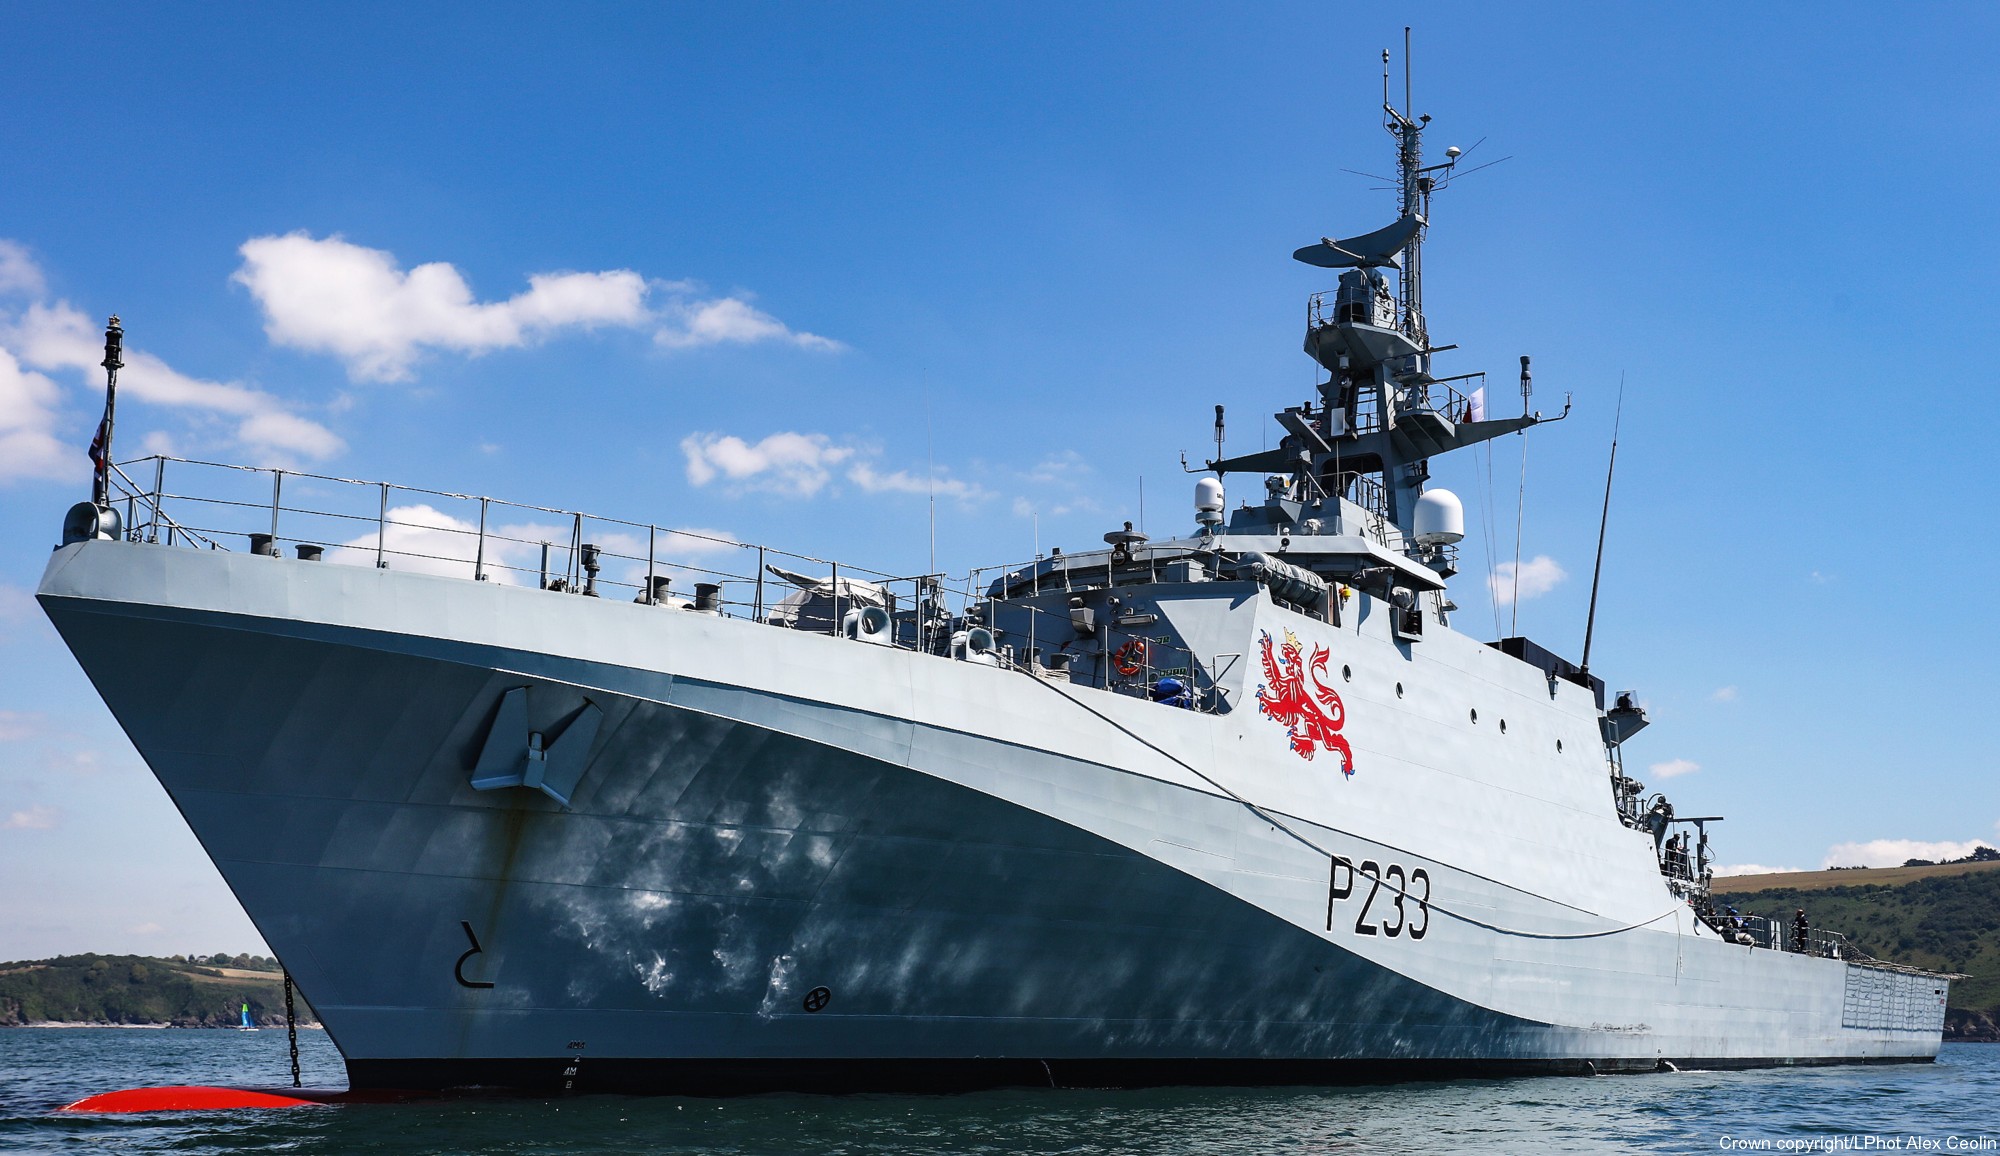 p233 hms tamar river class offshore patrol vessel opv royal navy 32